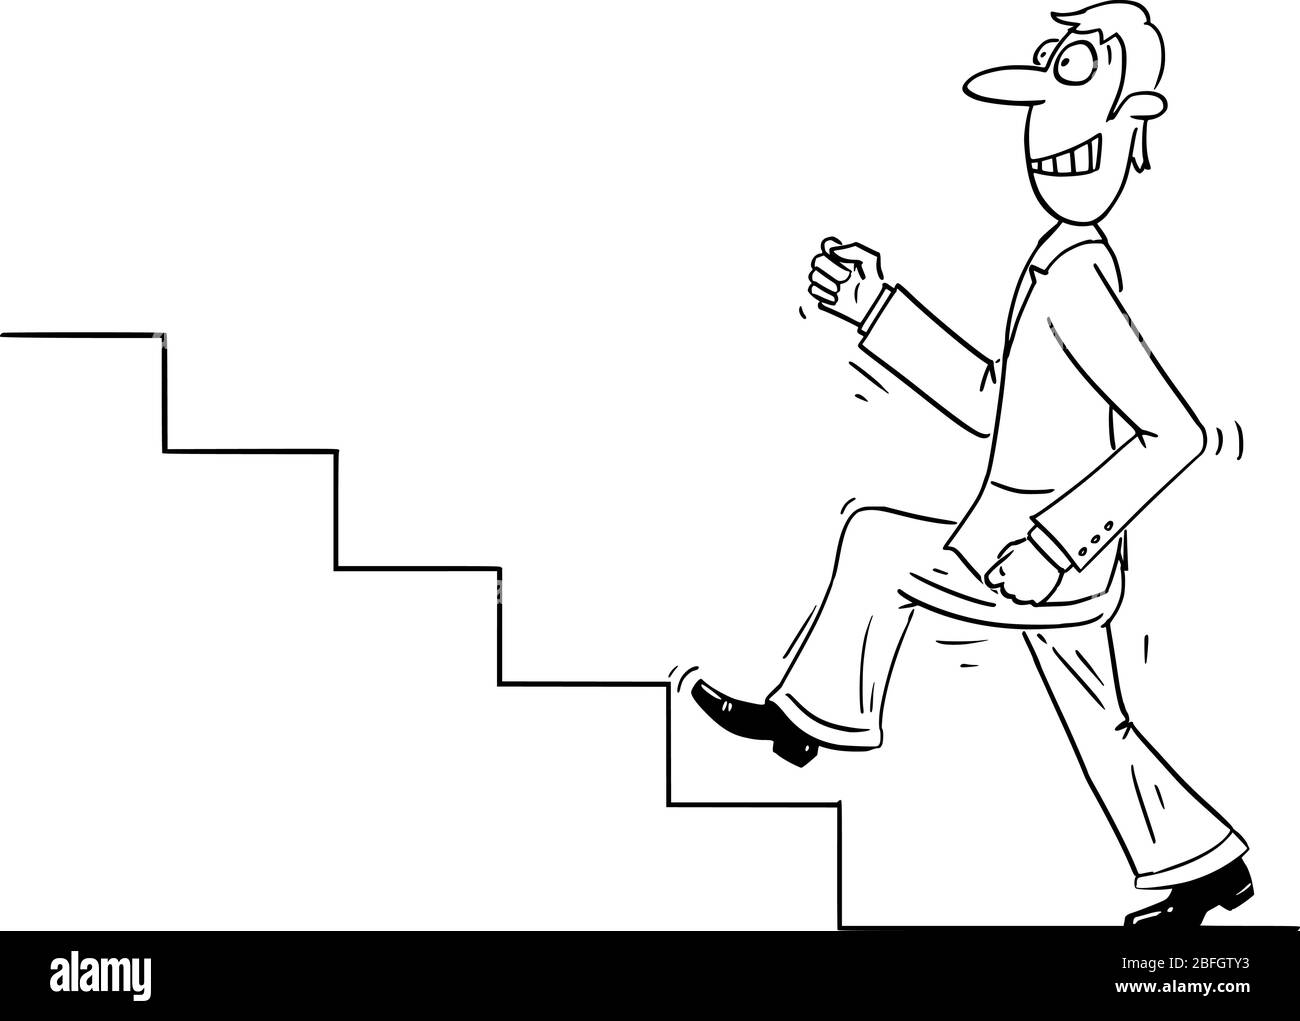 drawing of man walking up stairs